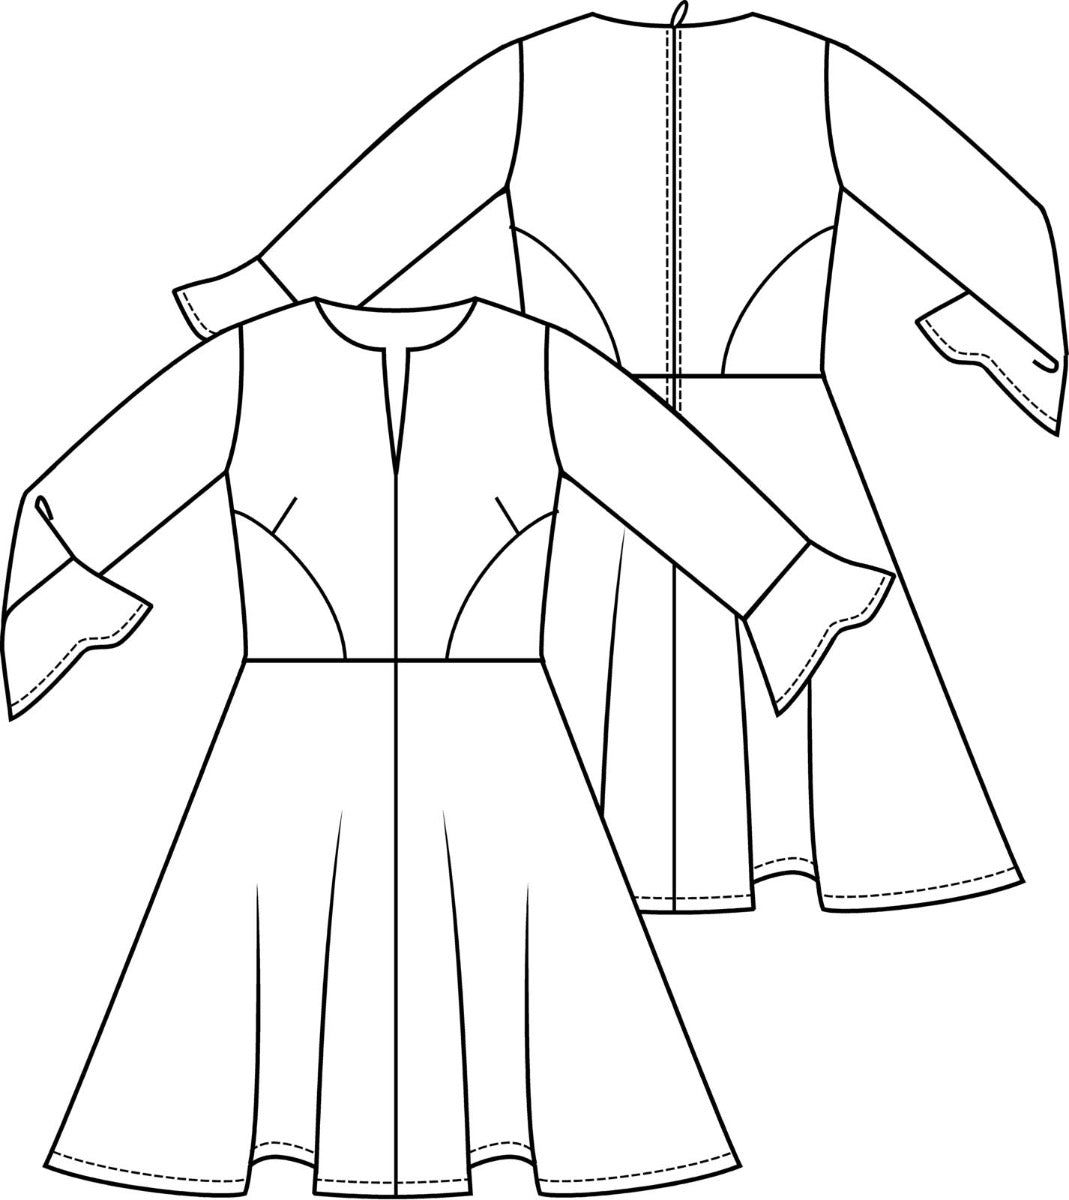 Schnitt 1811 - 09 Kleid